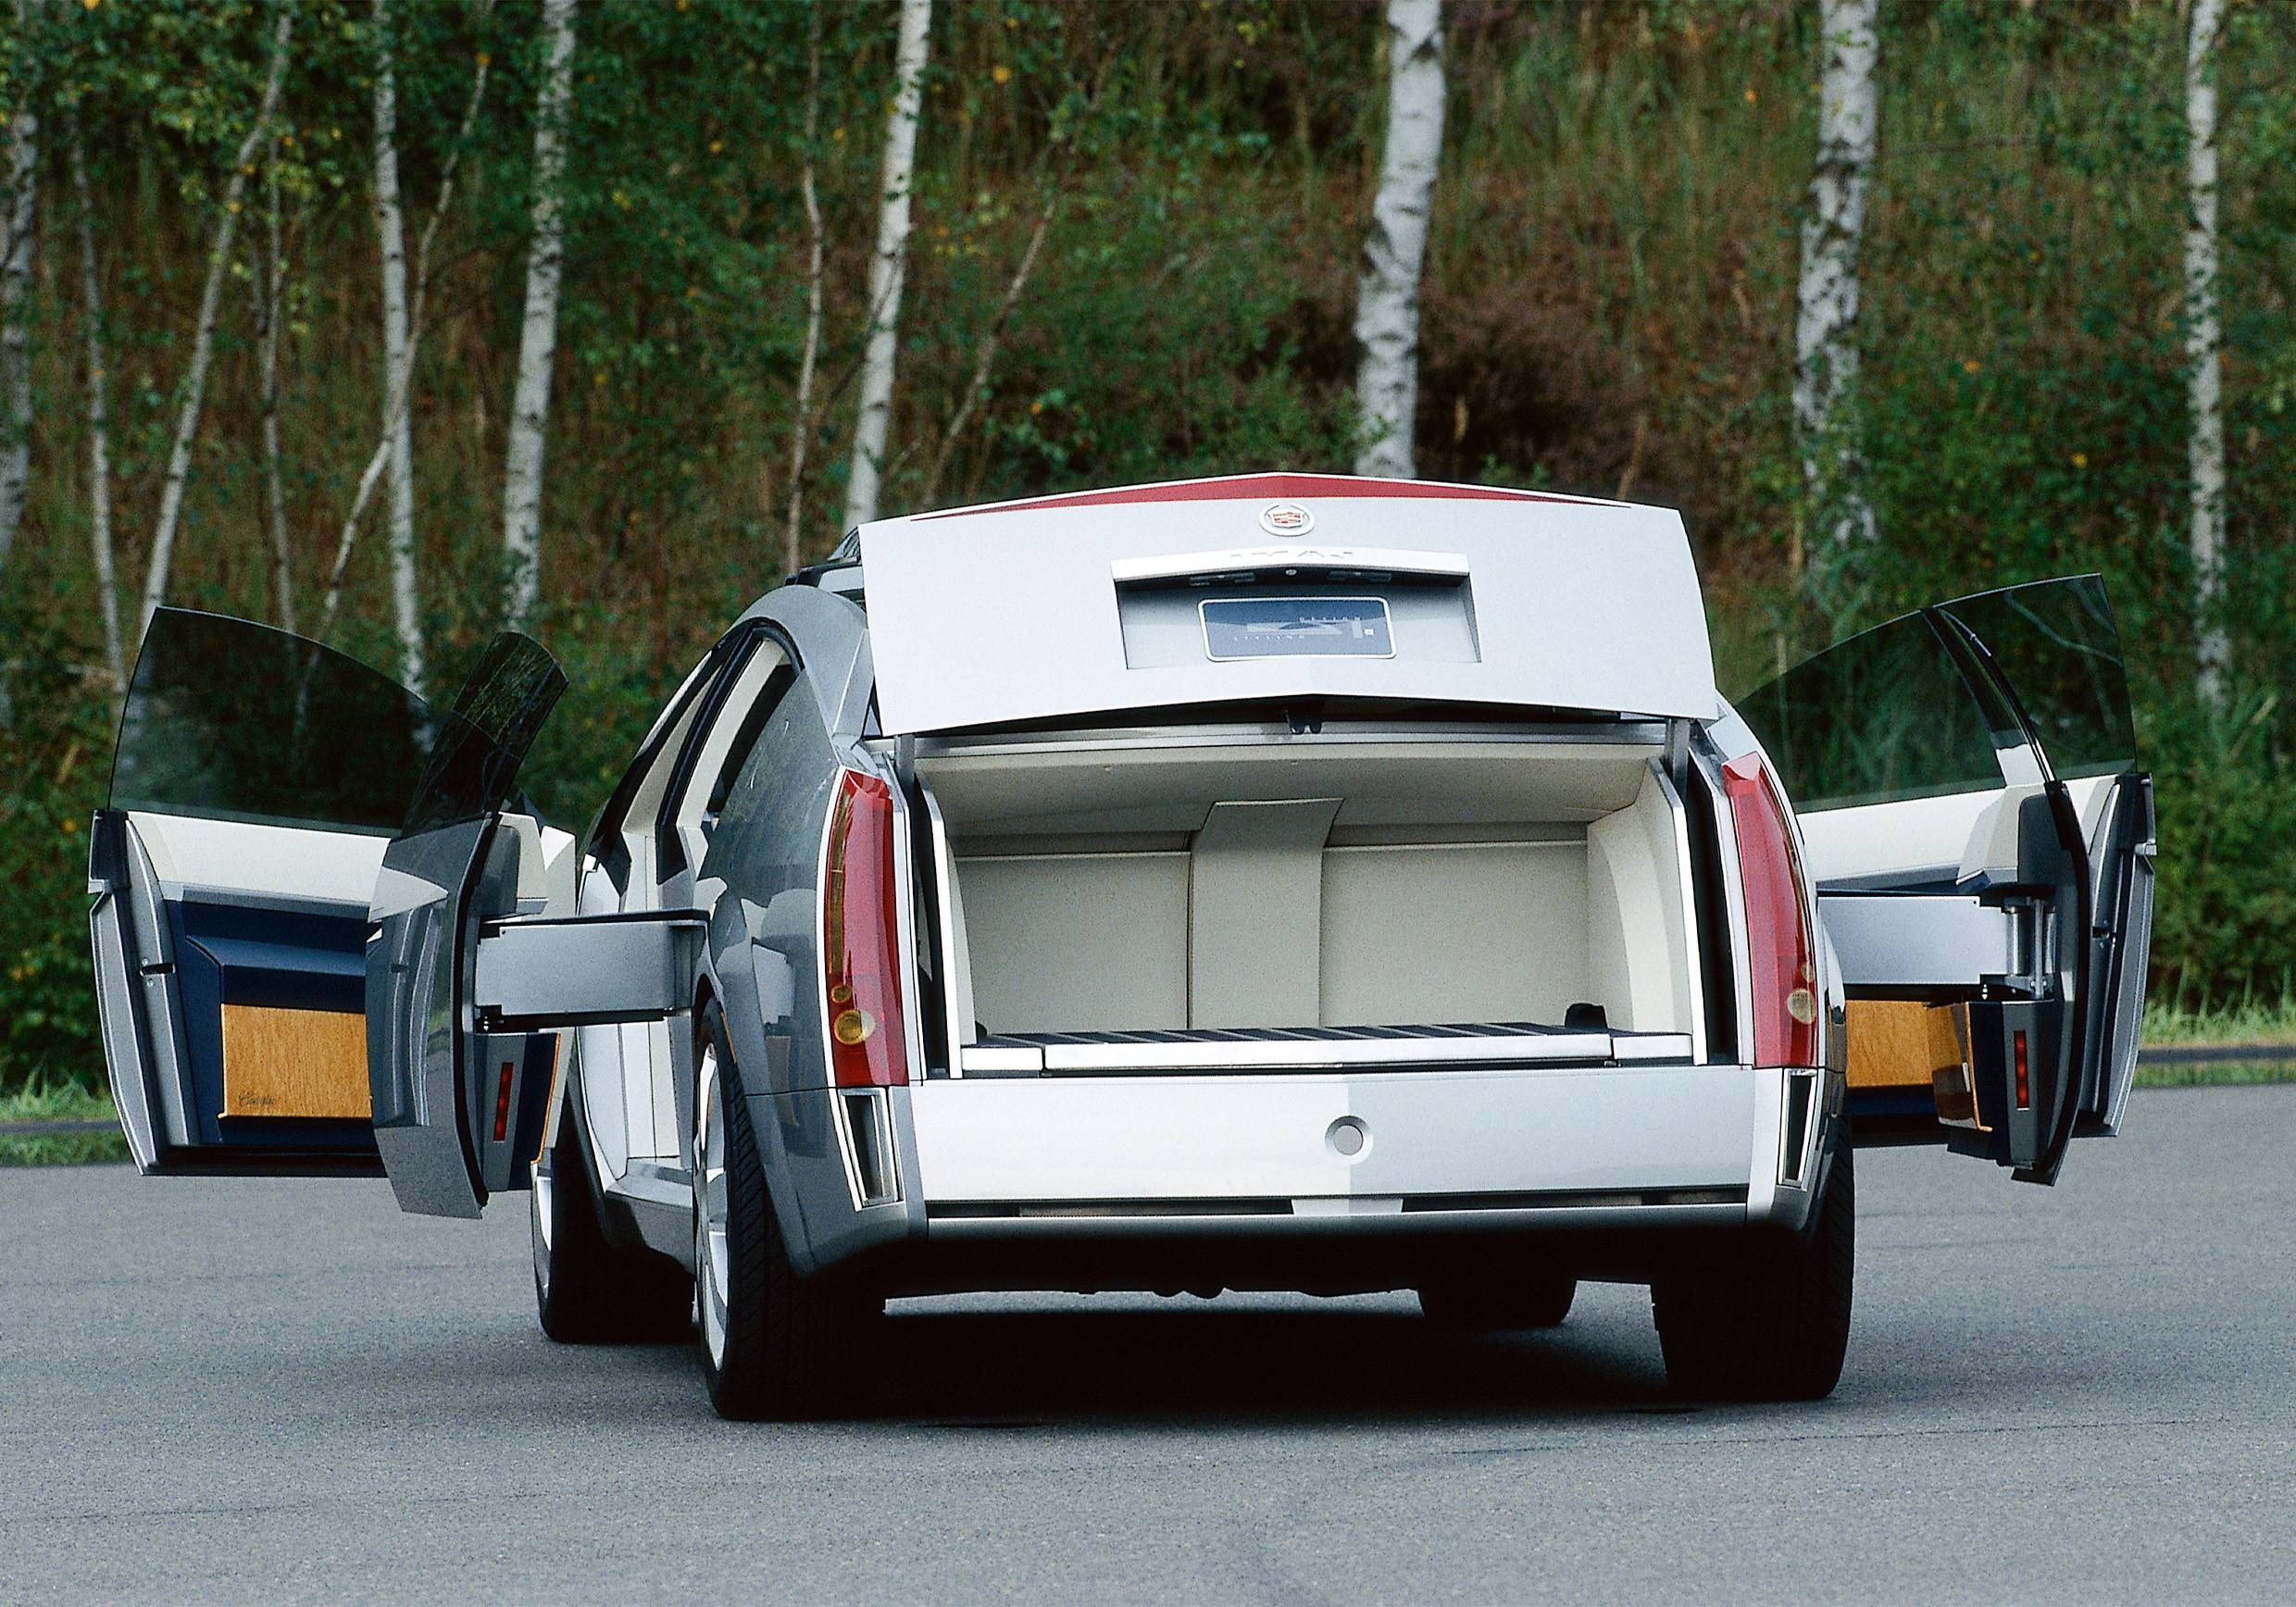 Cadillac Imaj Concept, 2000